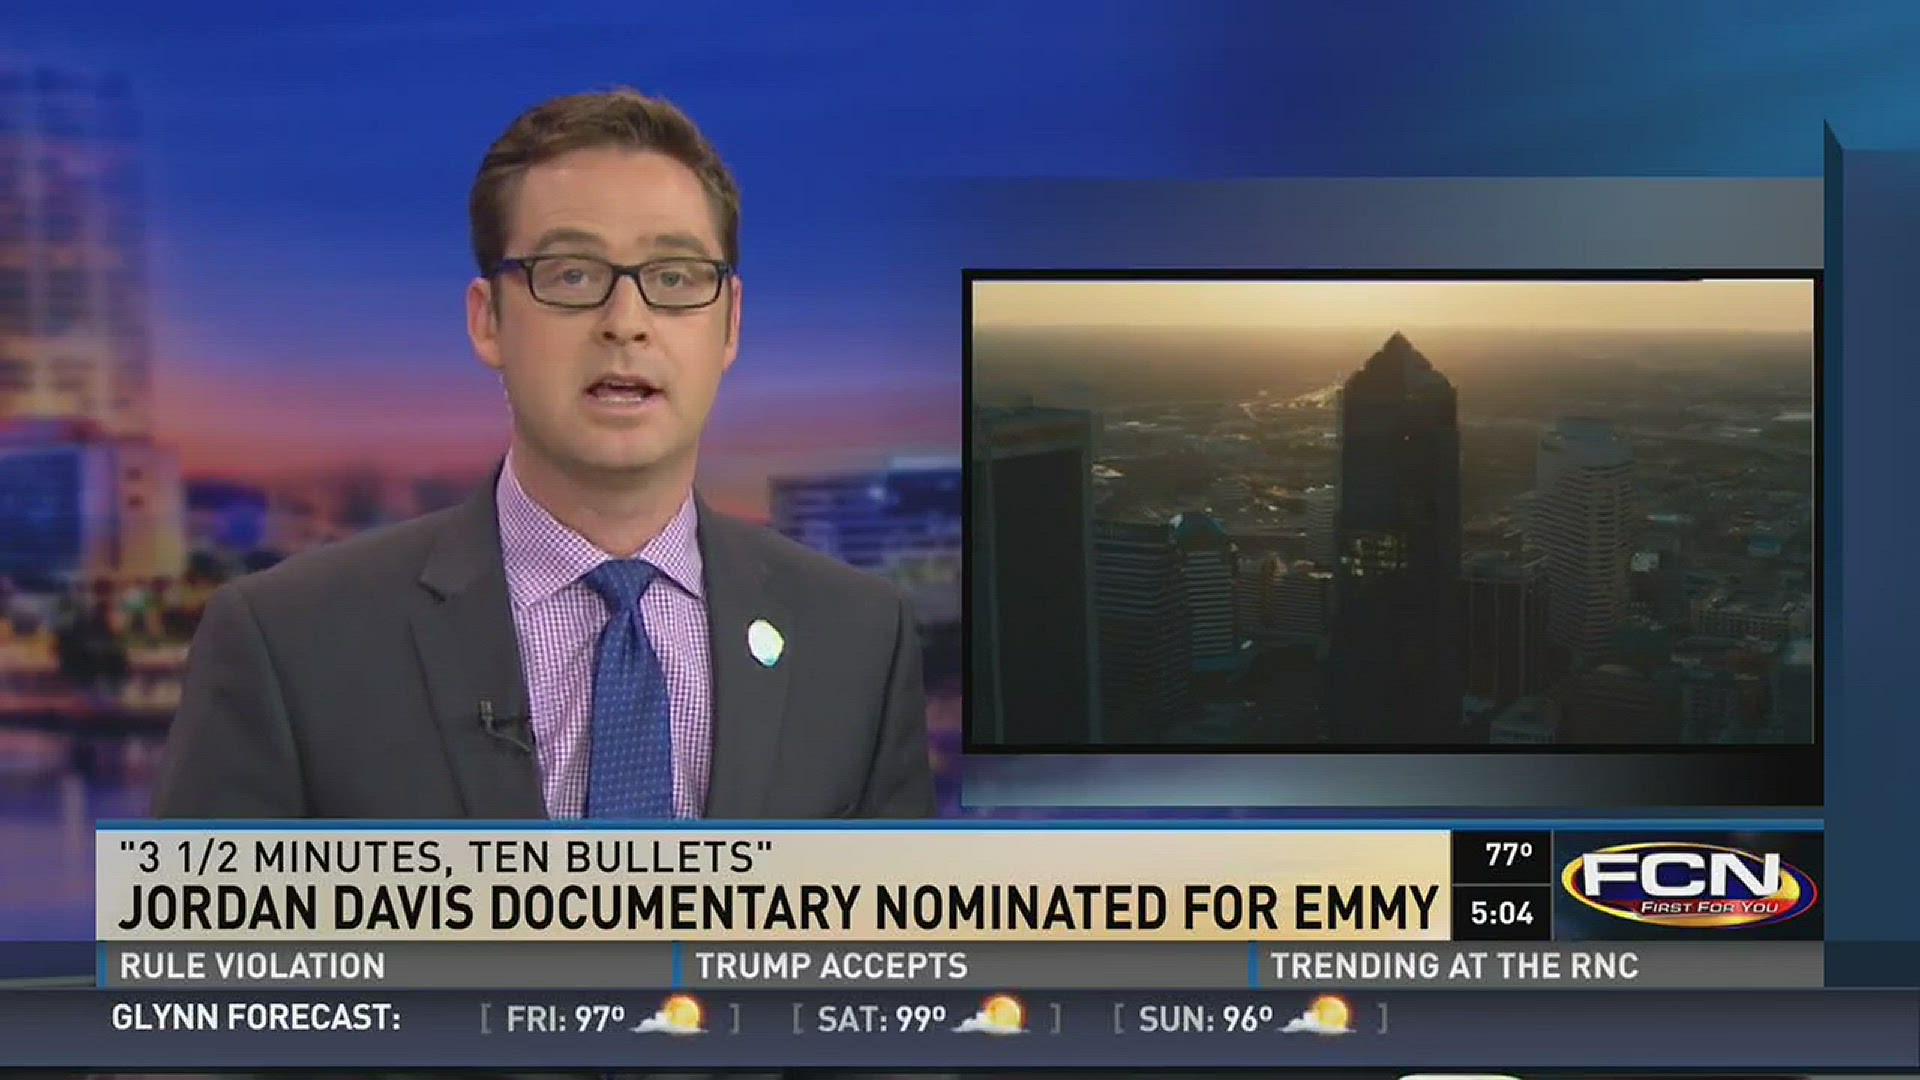 Jordan Davis Documentary nominated for Emmy